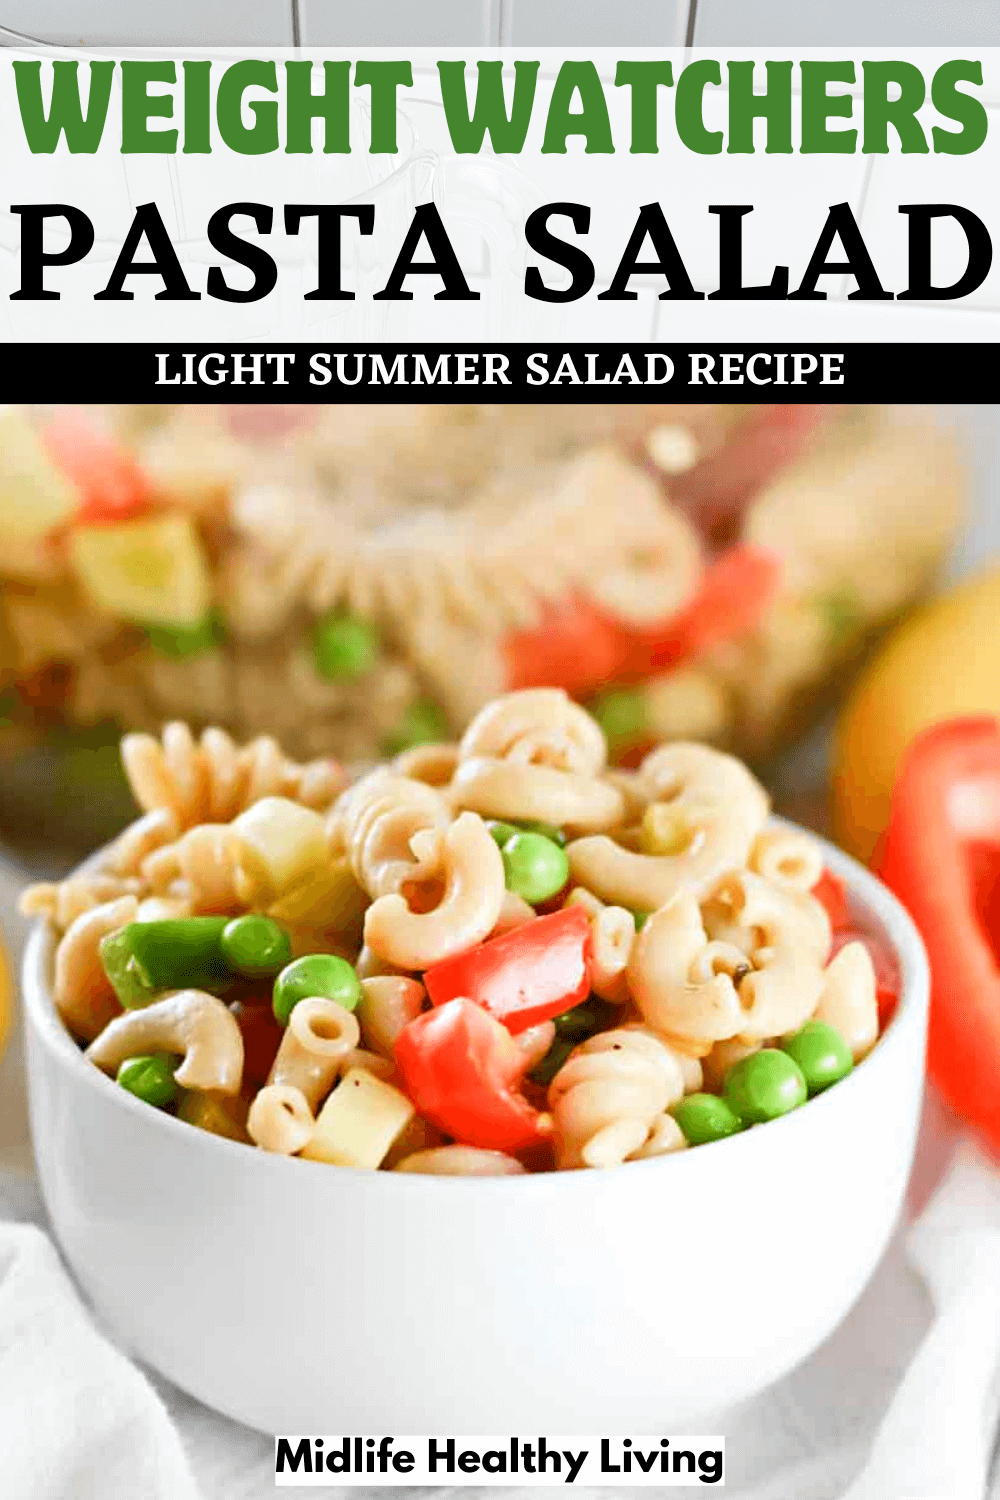 WW Pasta salad recipe